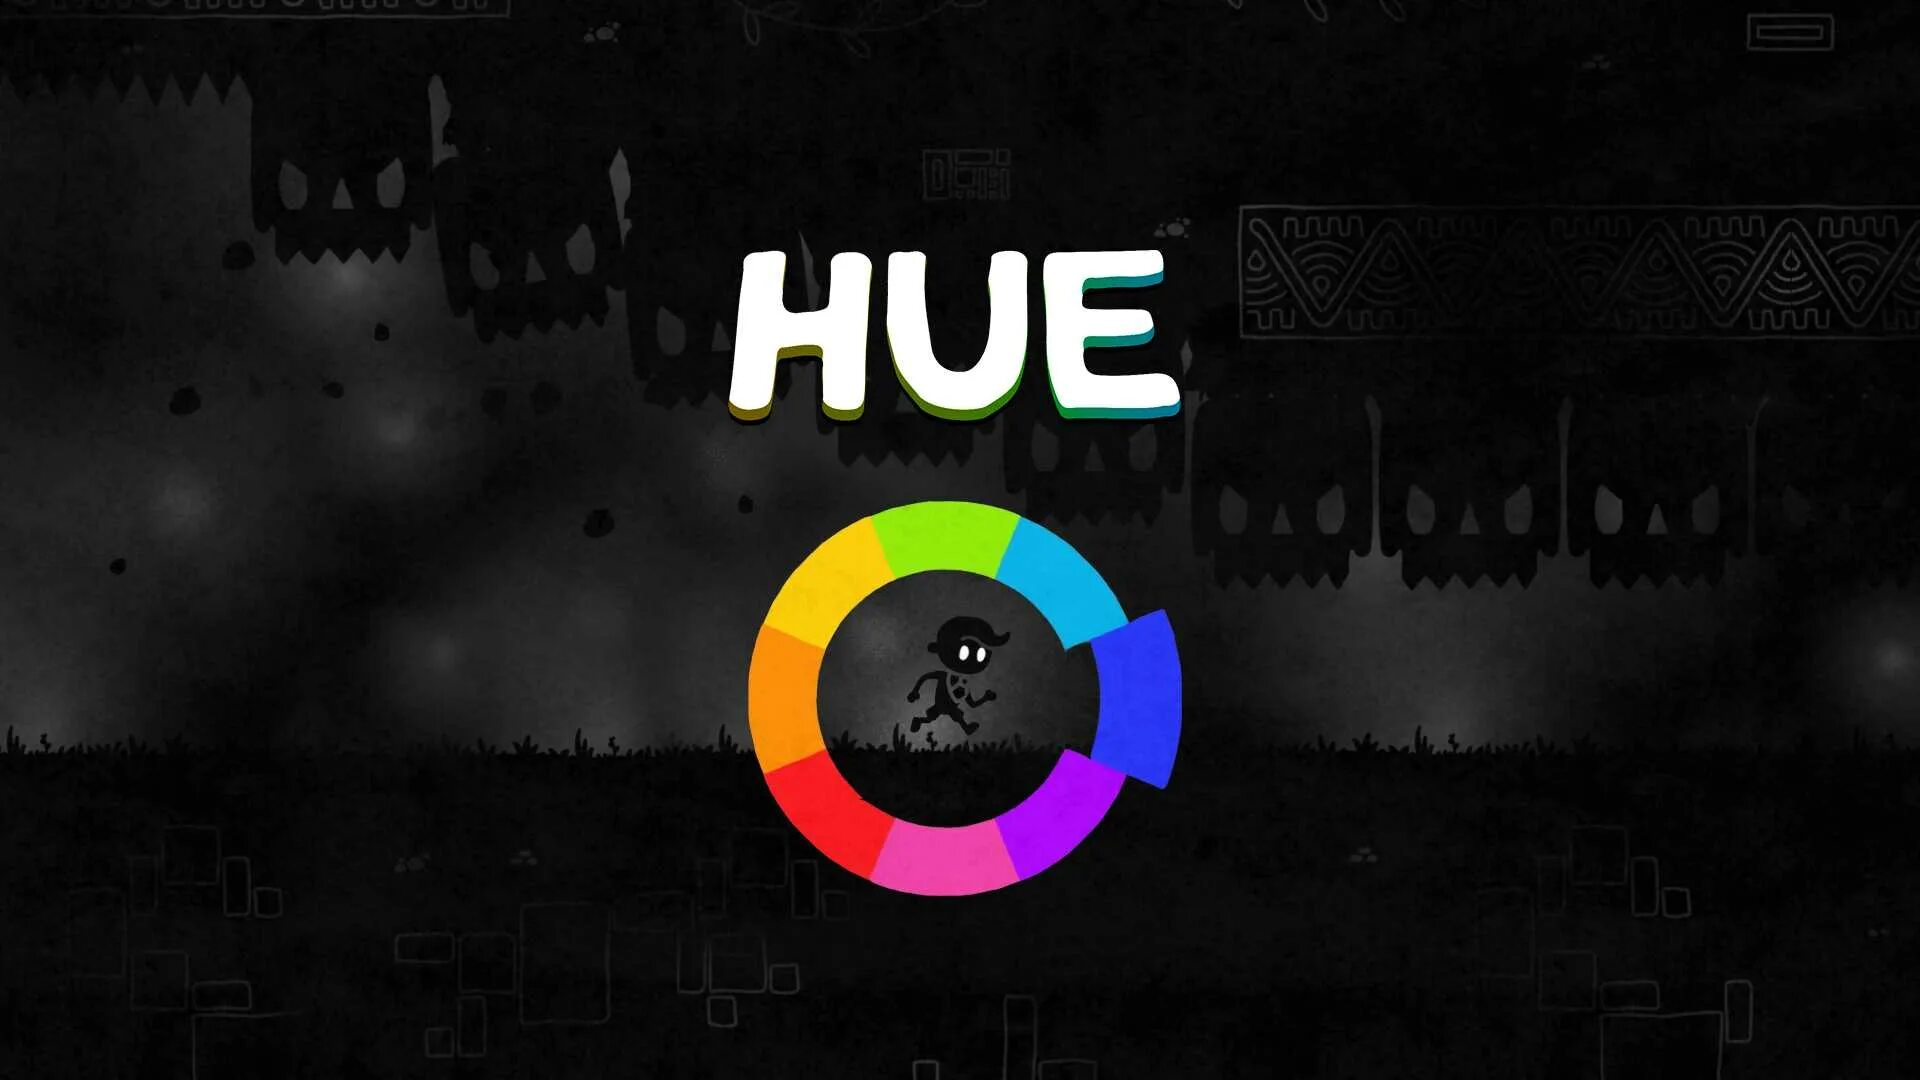 Игра Hue. Hue игра обложка. Hue Скриншоты. Игра Hue 2. Hue игра